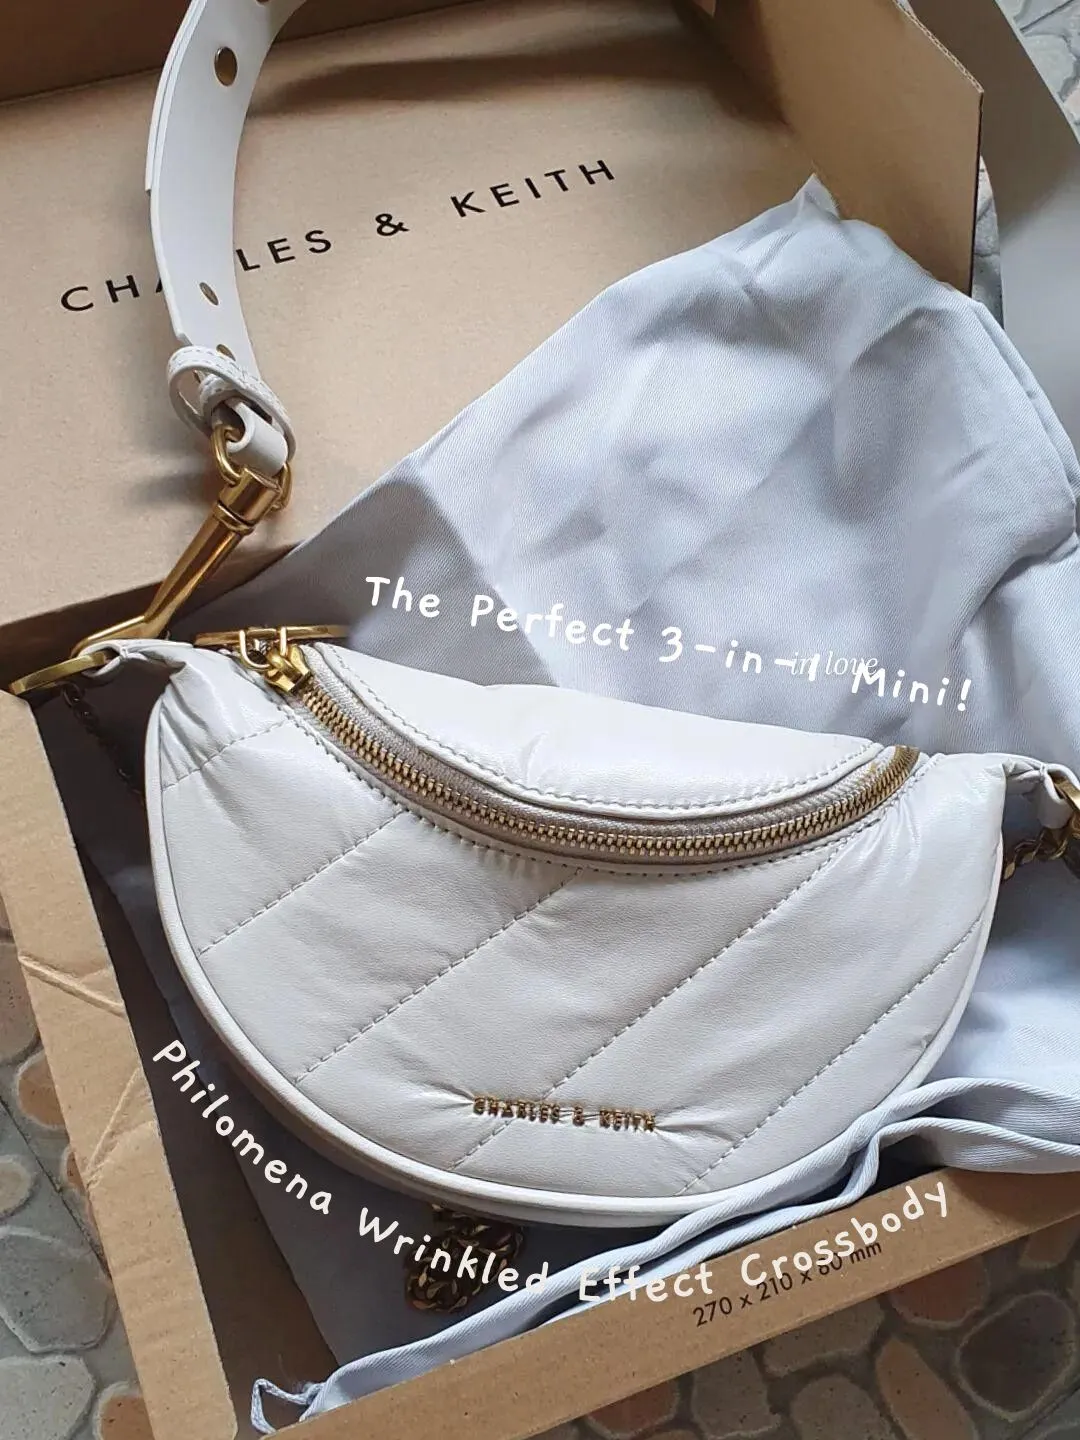 Charles & Keith - Women's Philomena Wrinkled-Effect Half-Moon Crossbody Bag, Black, S